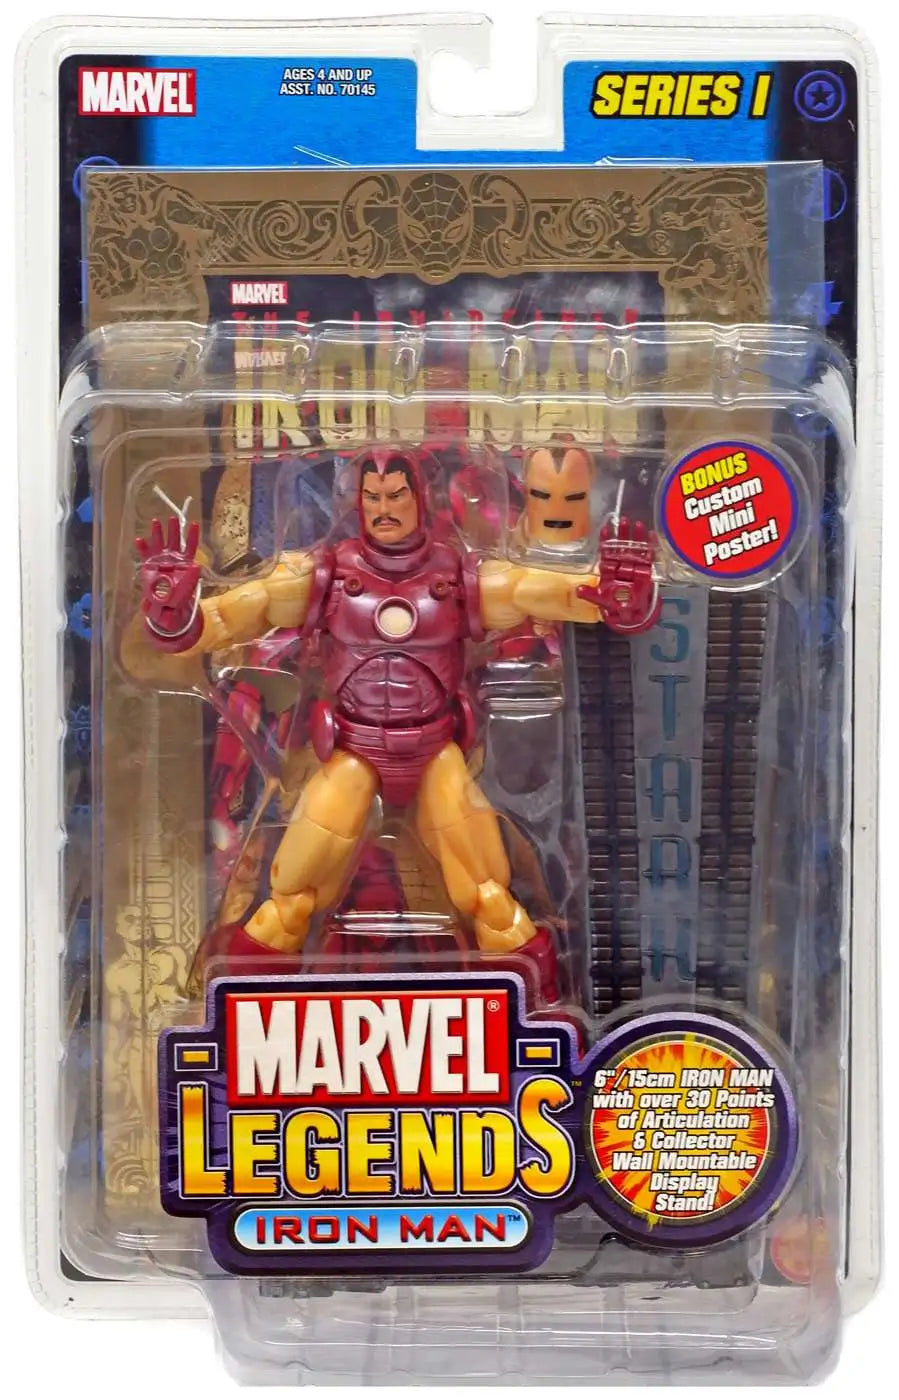 Toybiz - Marvel Legends - Iron Man  - Series 1 (Gold Foil Variant)